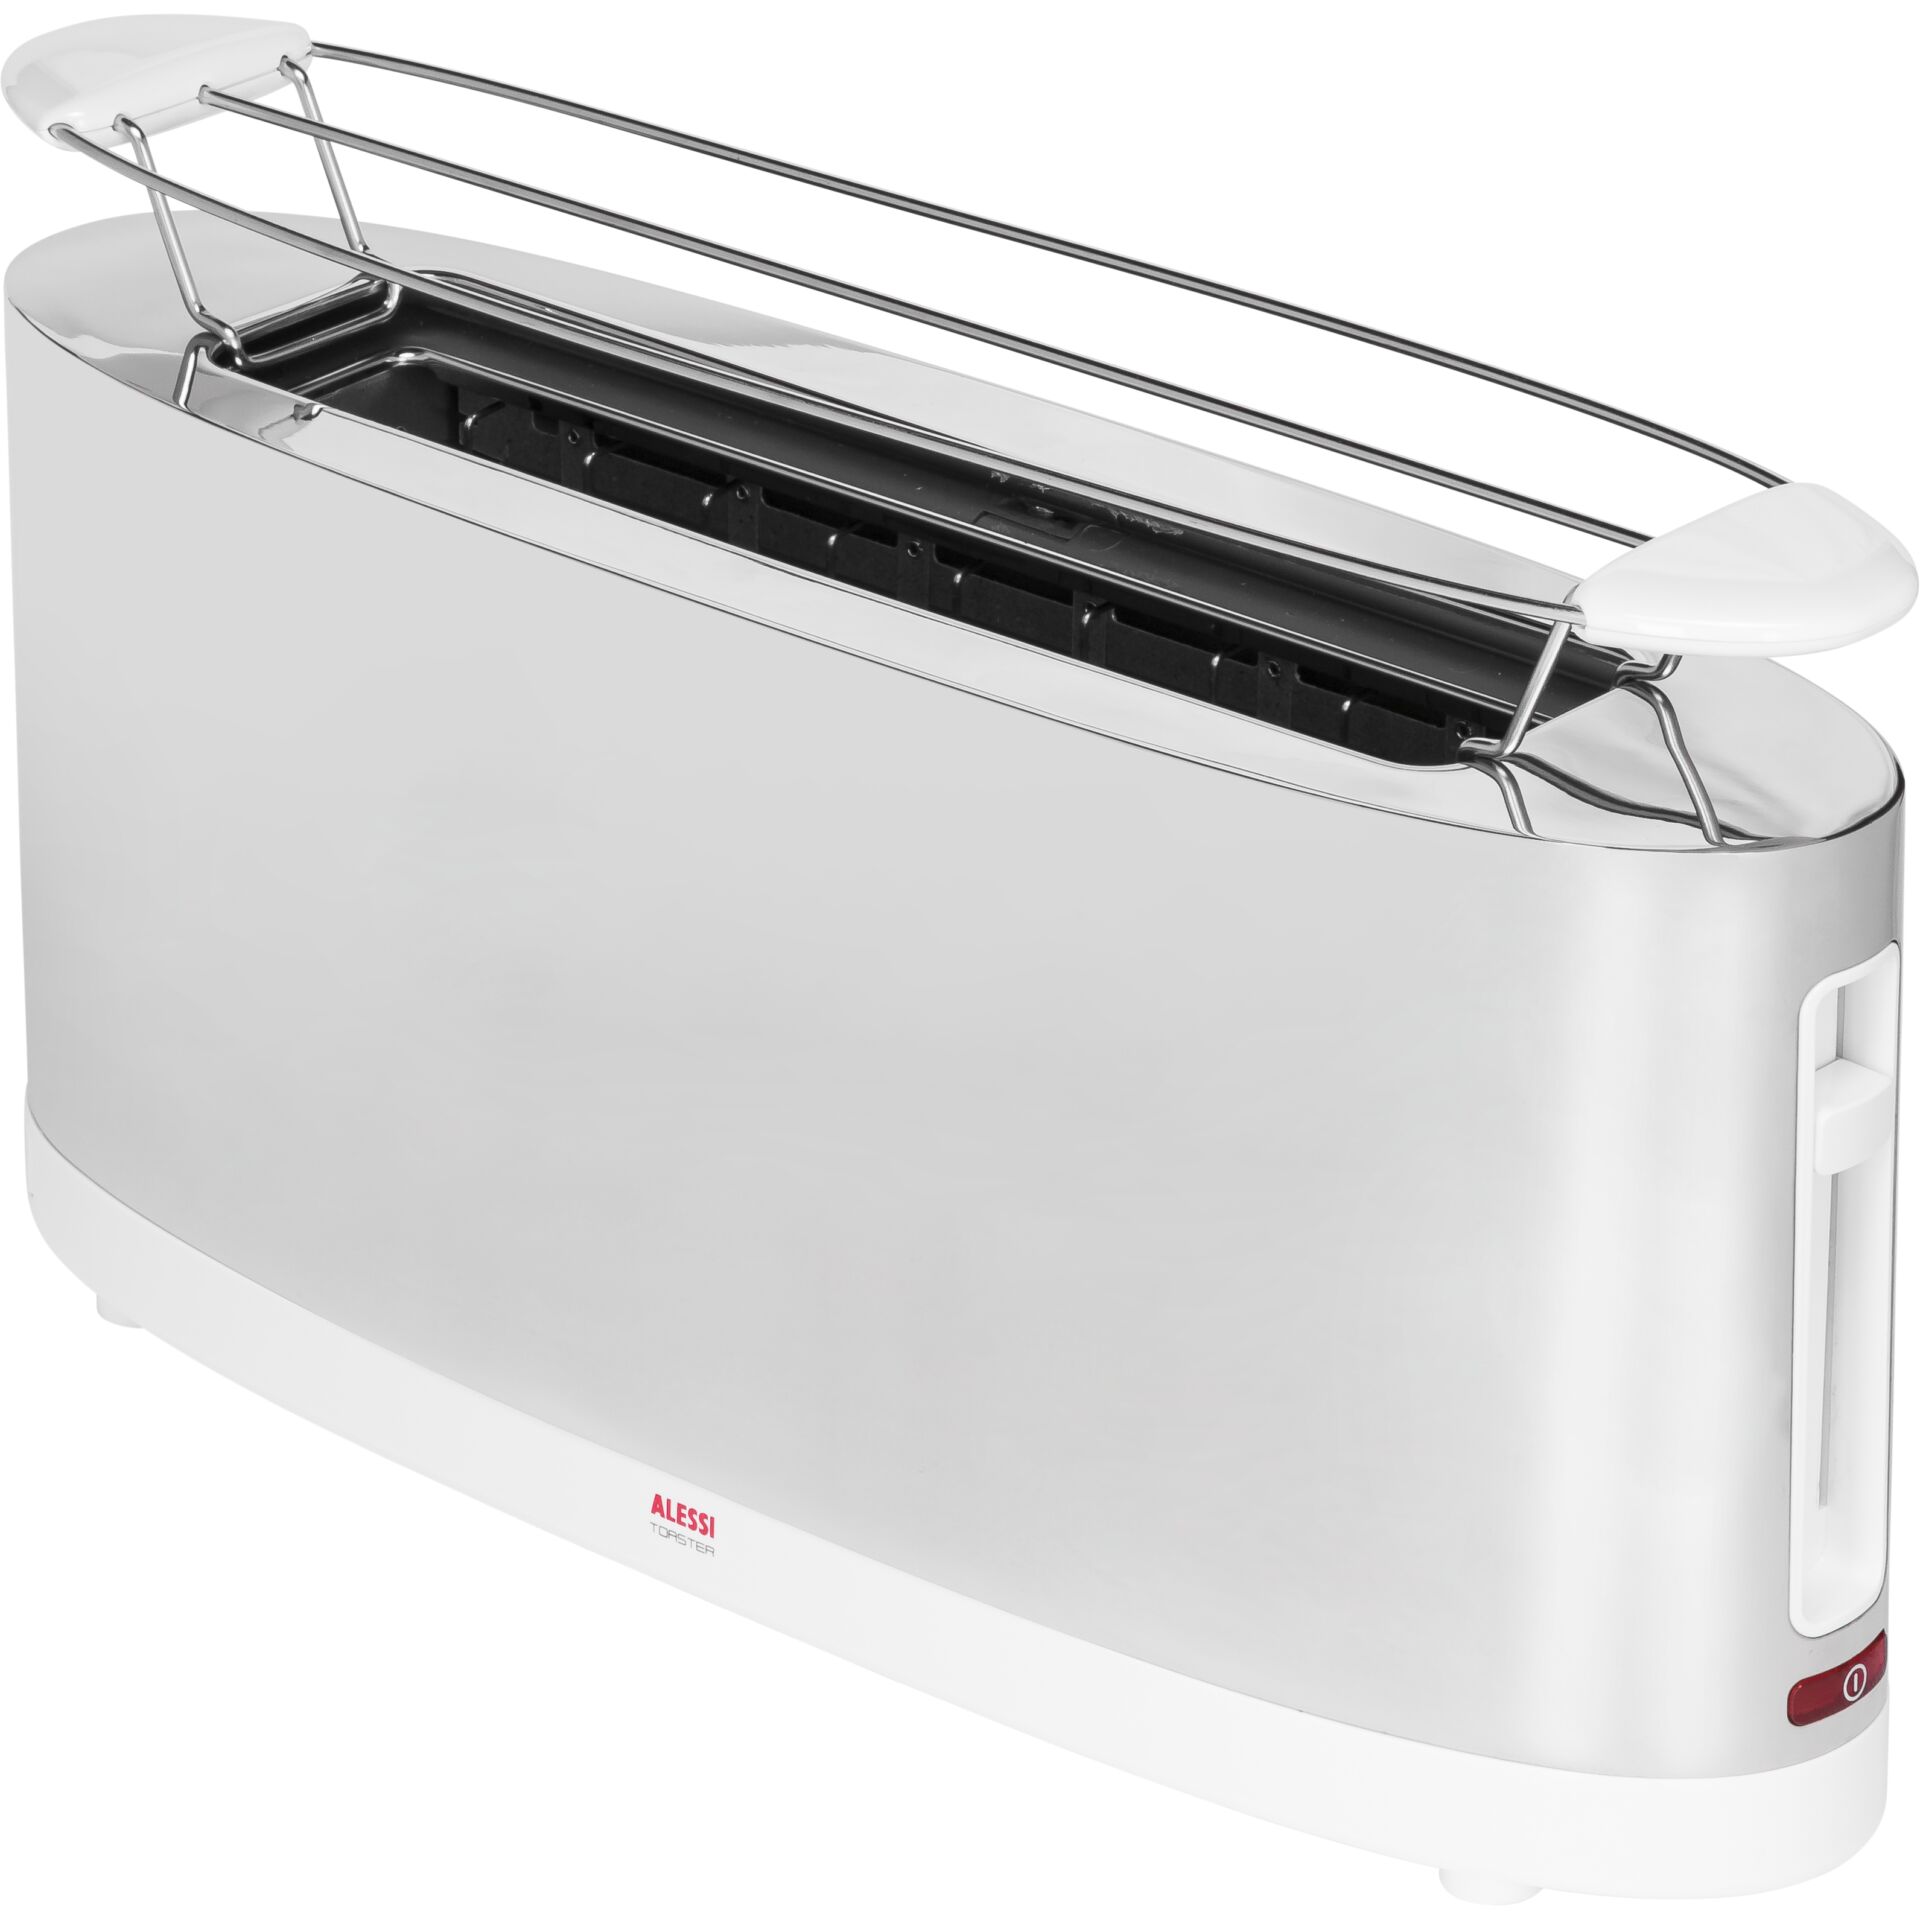 Alessi SG68W Toaster